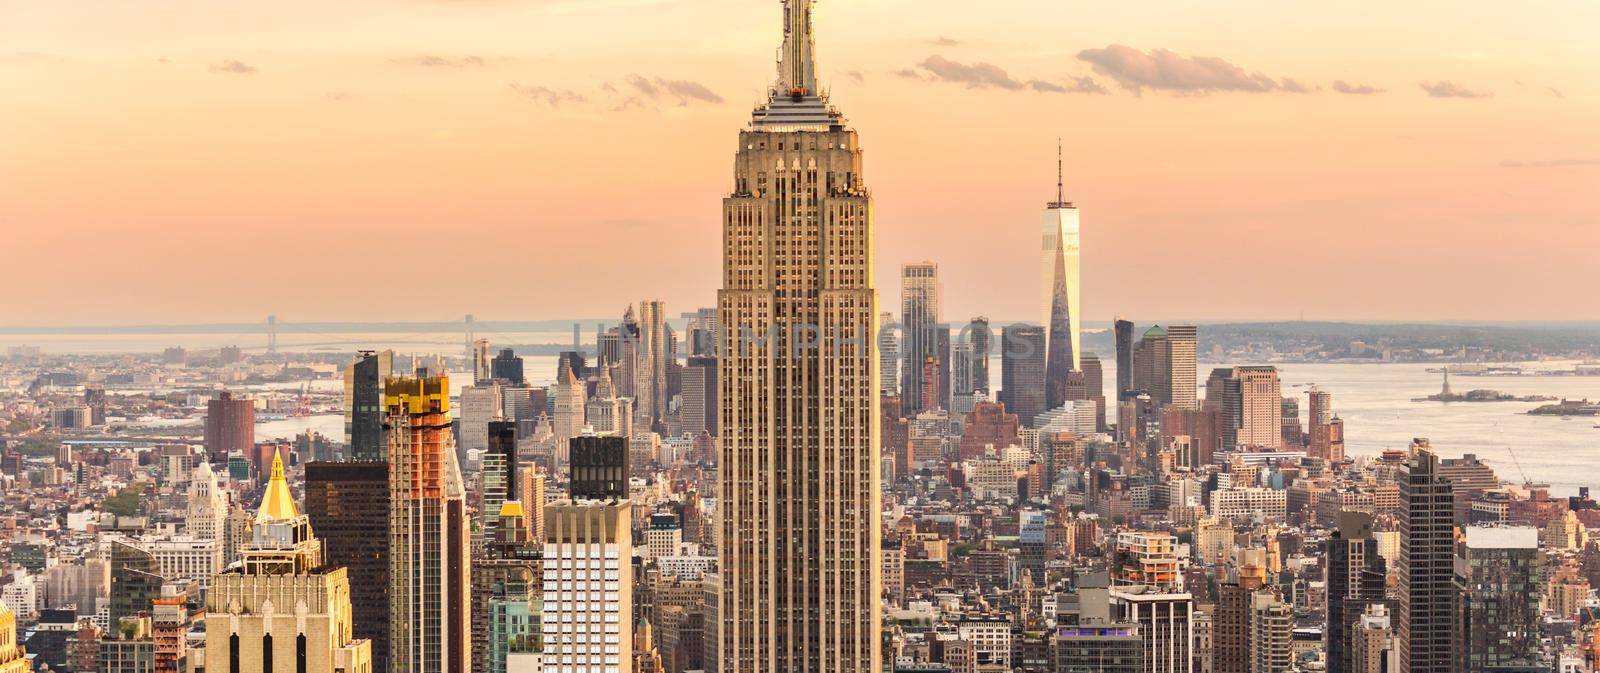 Panorama of New York city skyline at sunset, USA